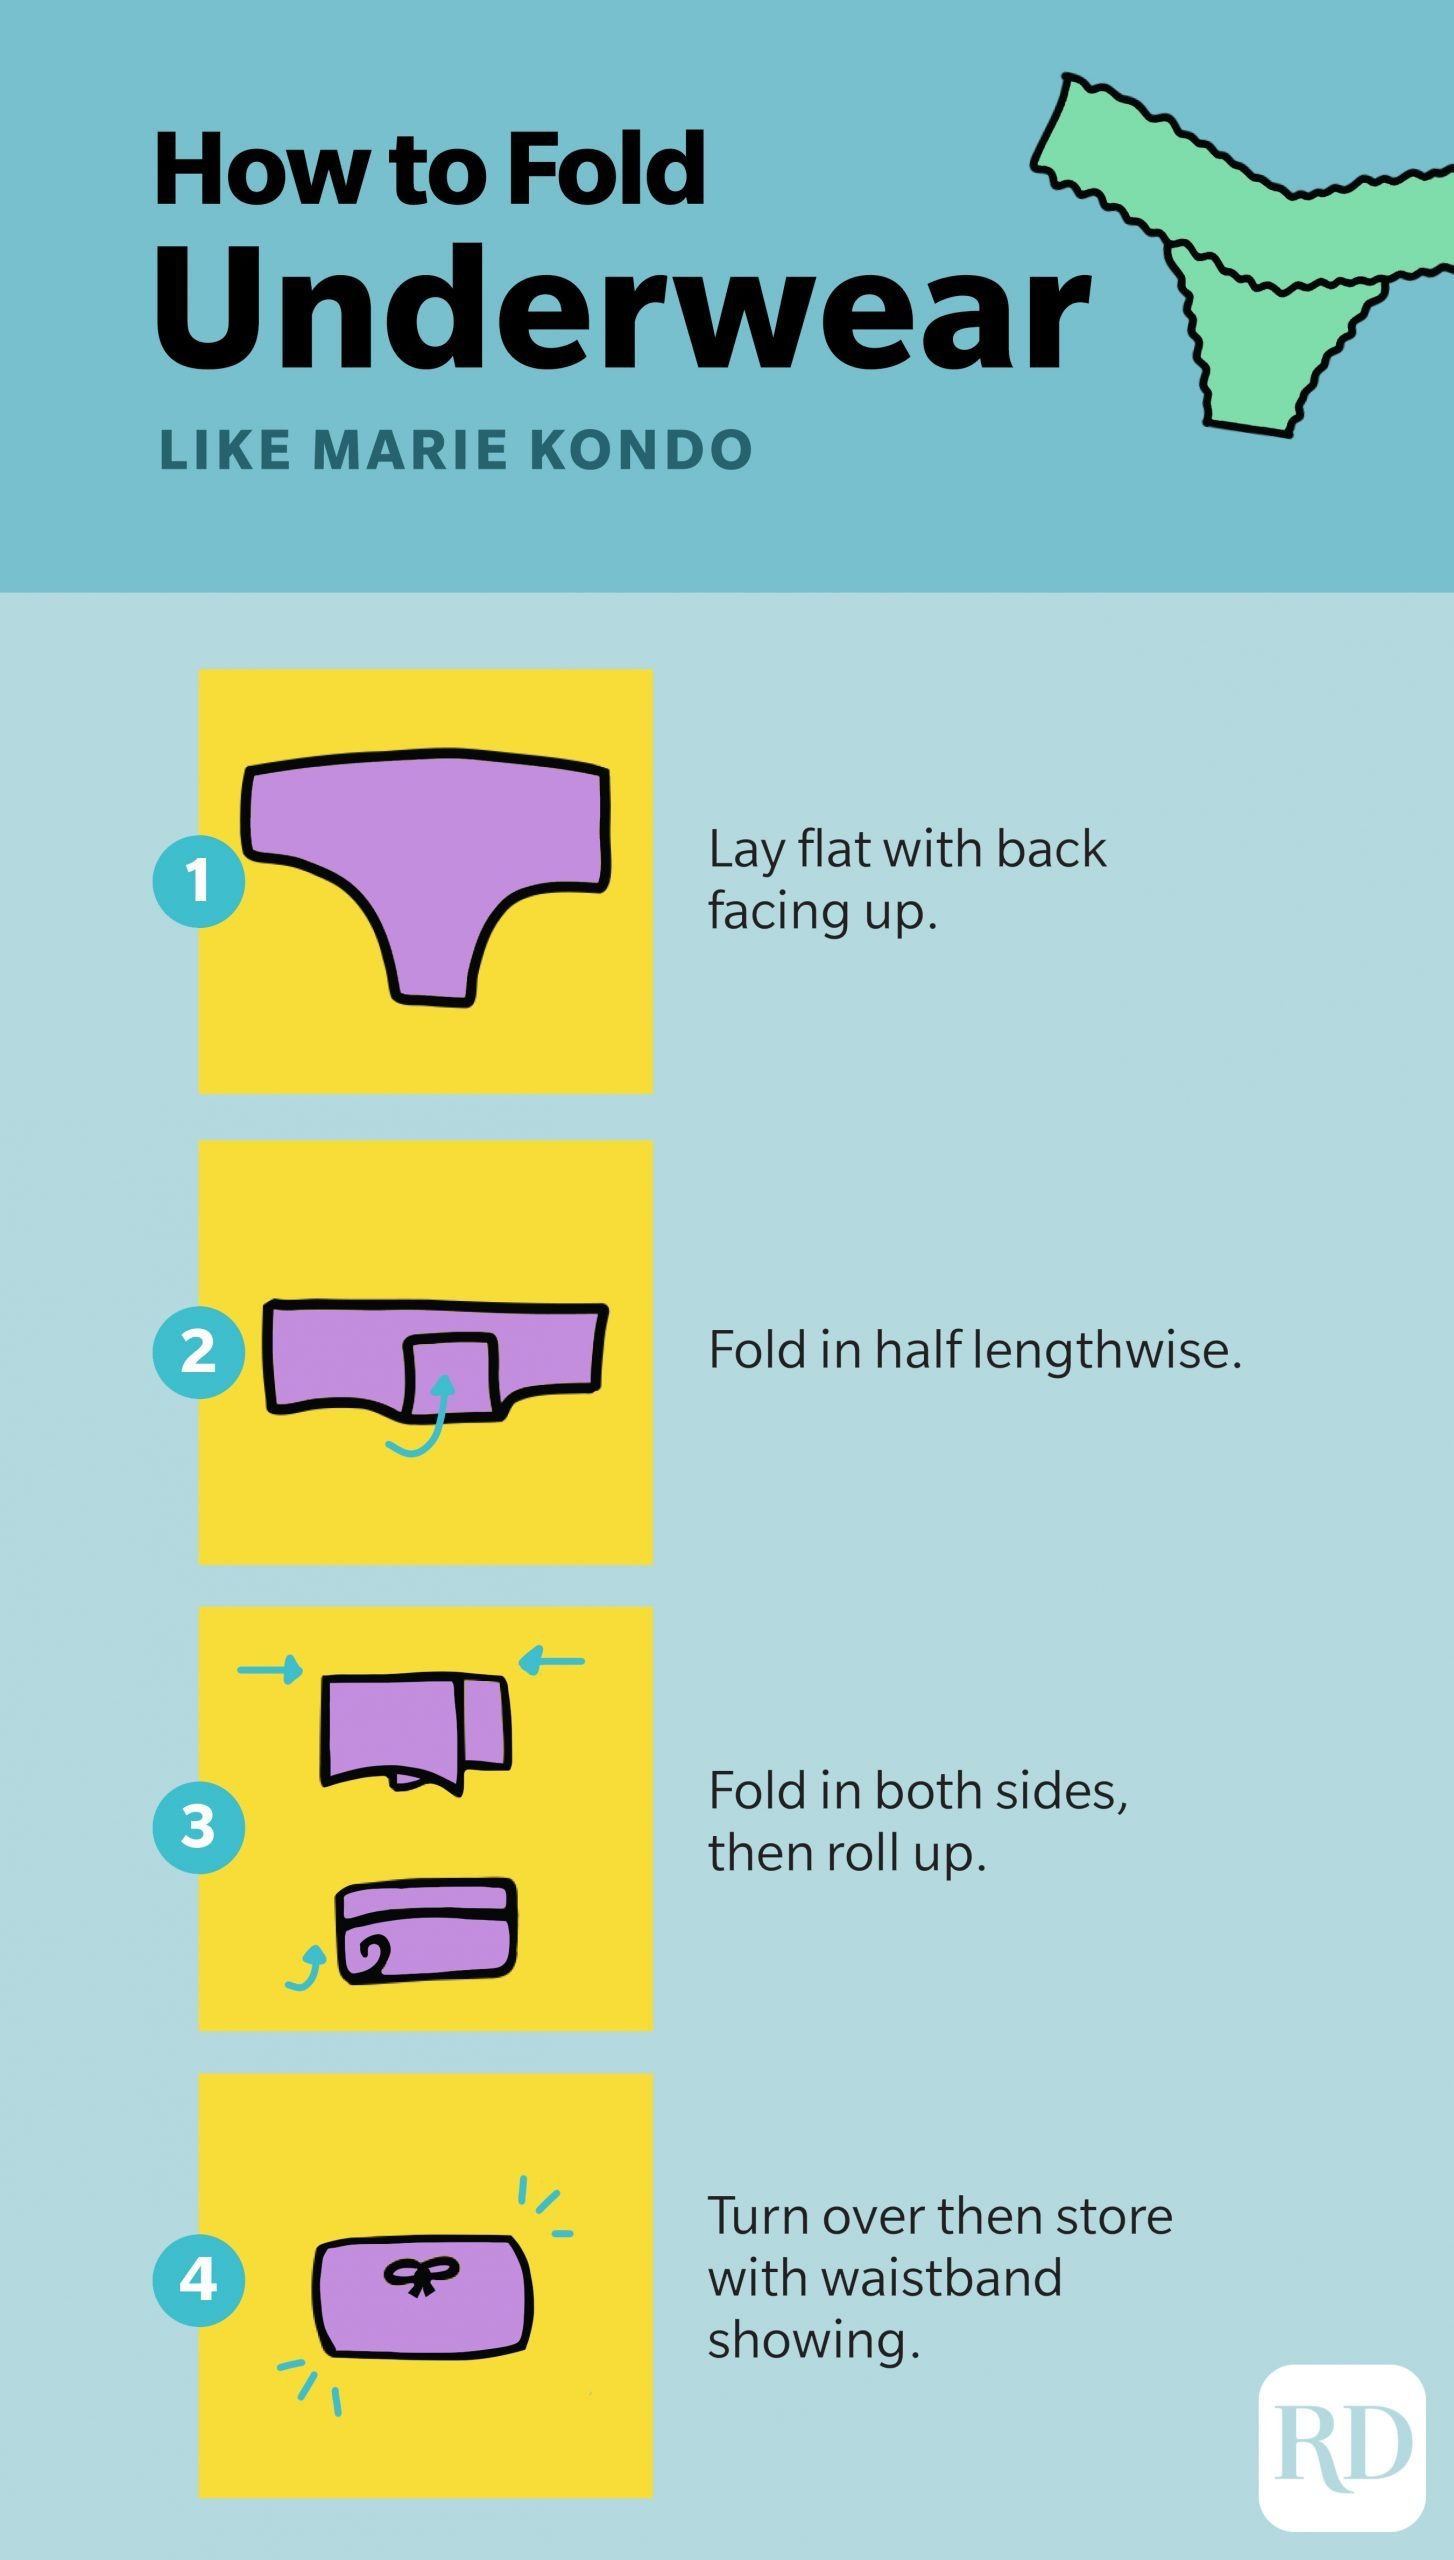 How to fold underwear like Marie Kondo infographic